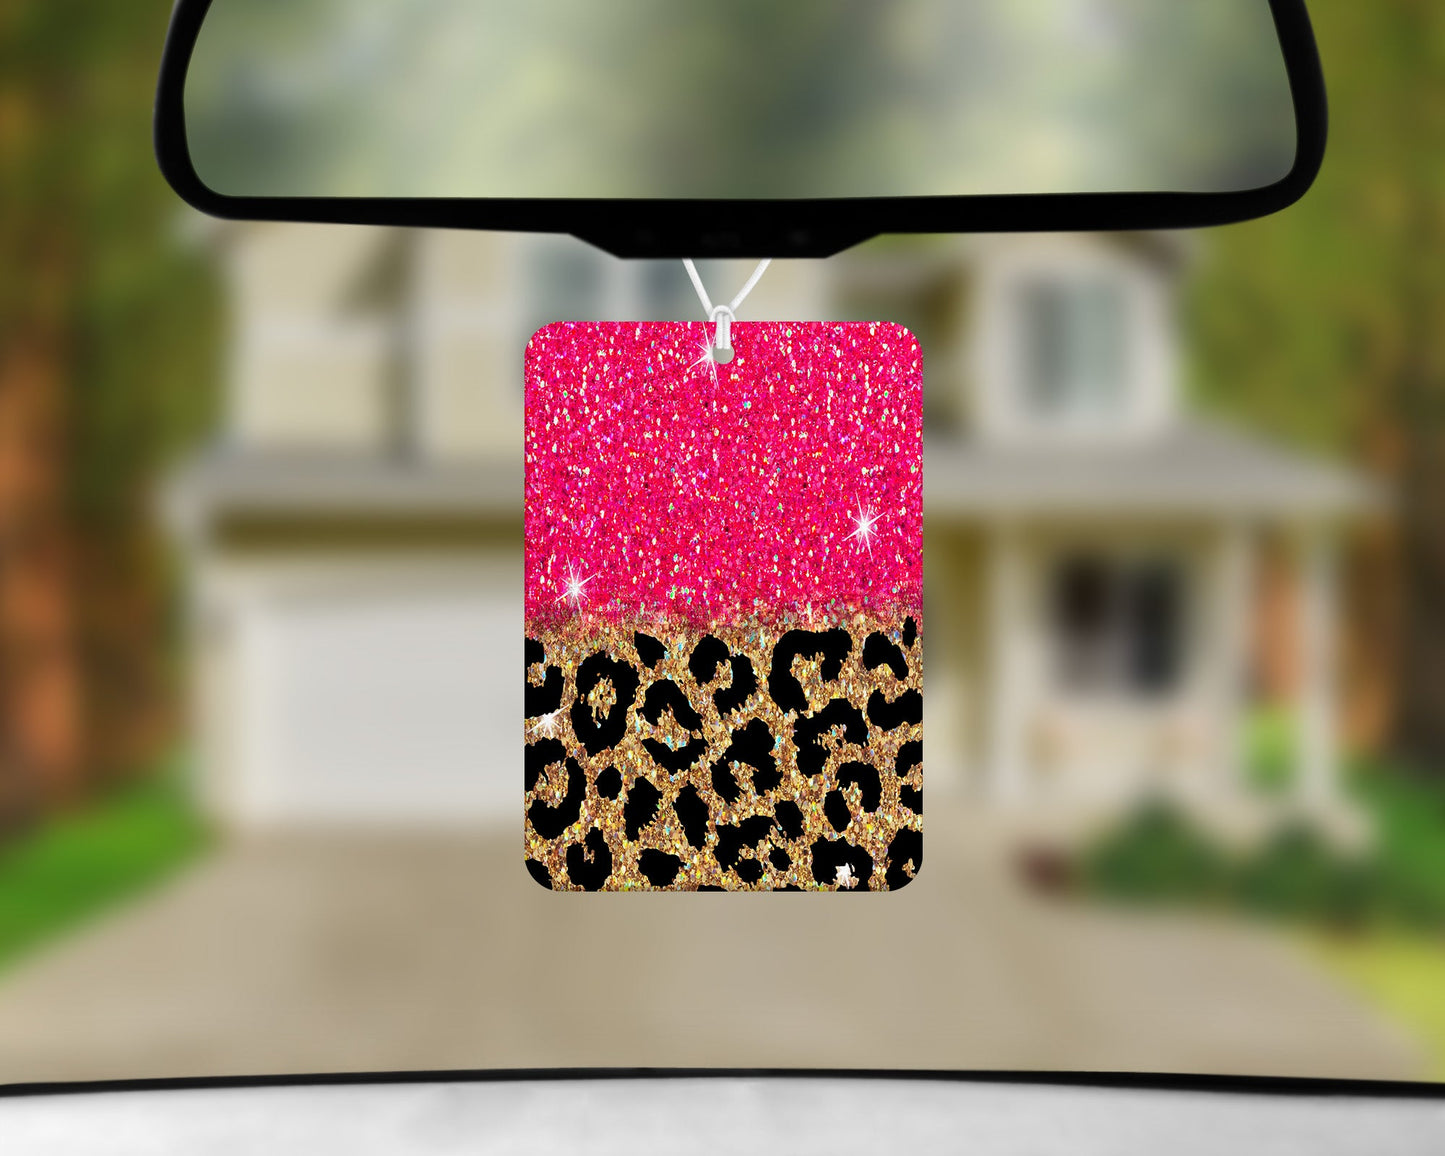 Hot Pink Leopard Print|Freshie|Includes Scent Bottle - Vehicle Air Freshener